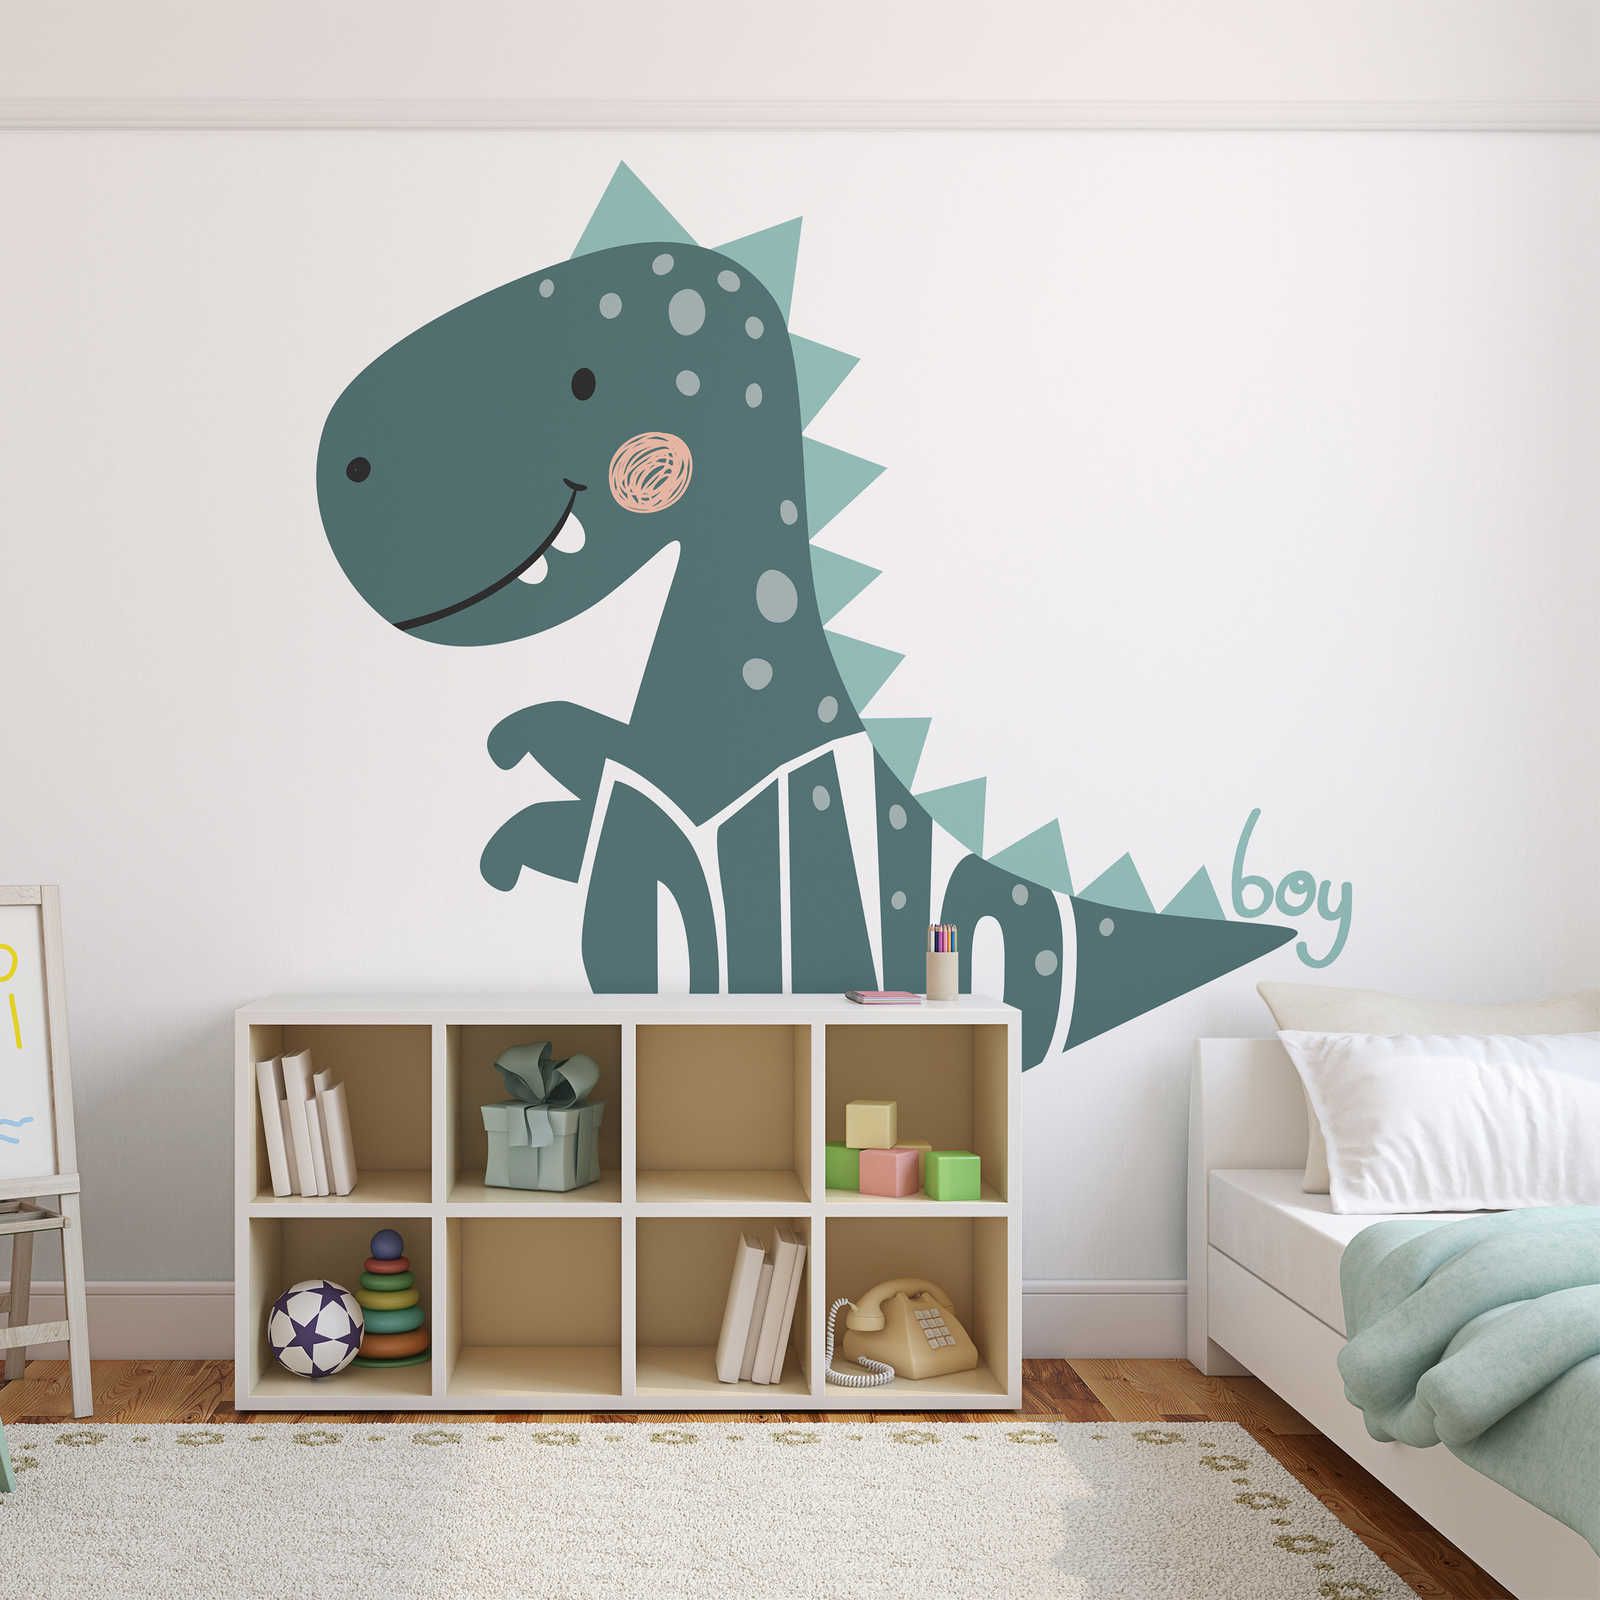 Children's Room Wallpaper with Dinosaur - Textured non-woven
